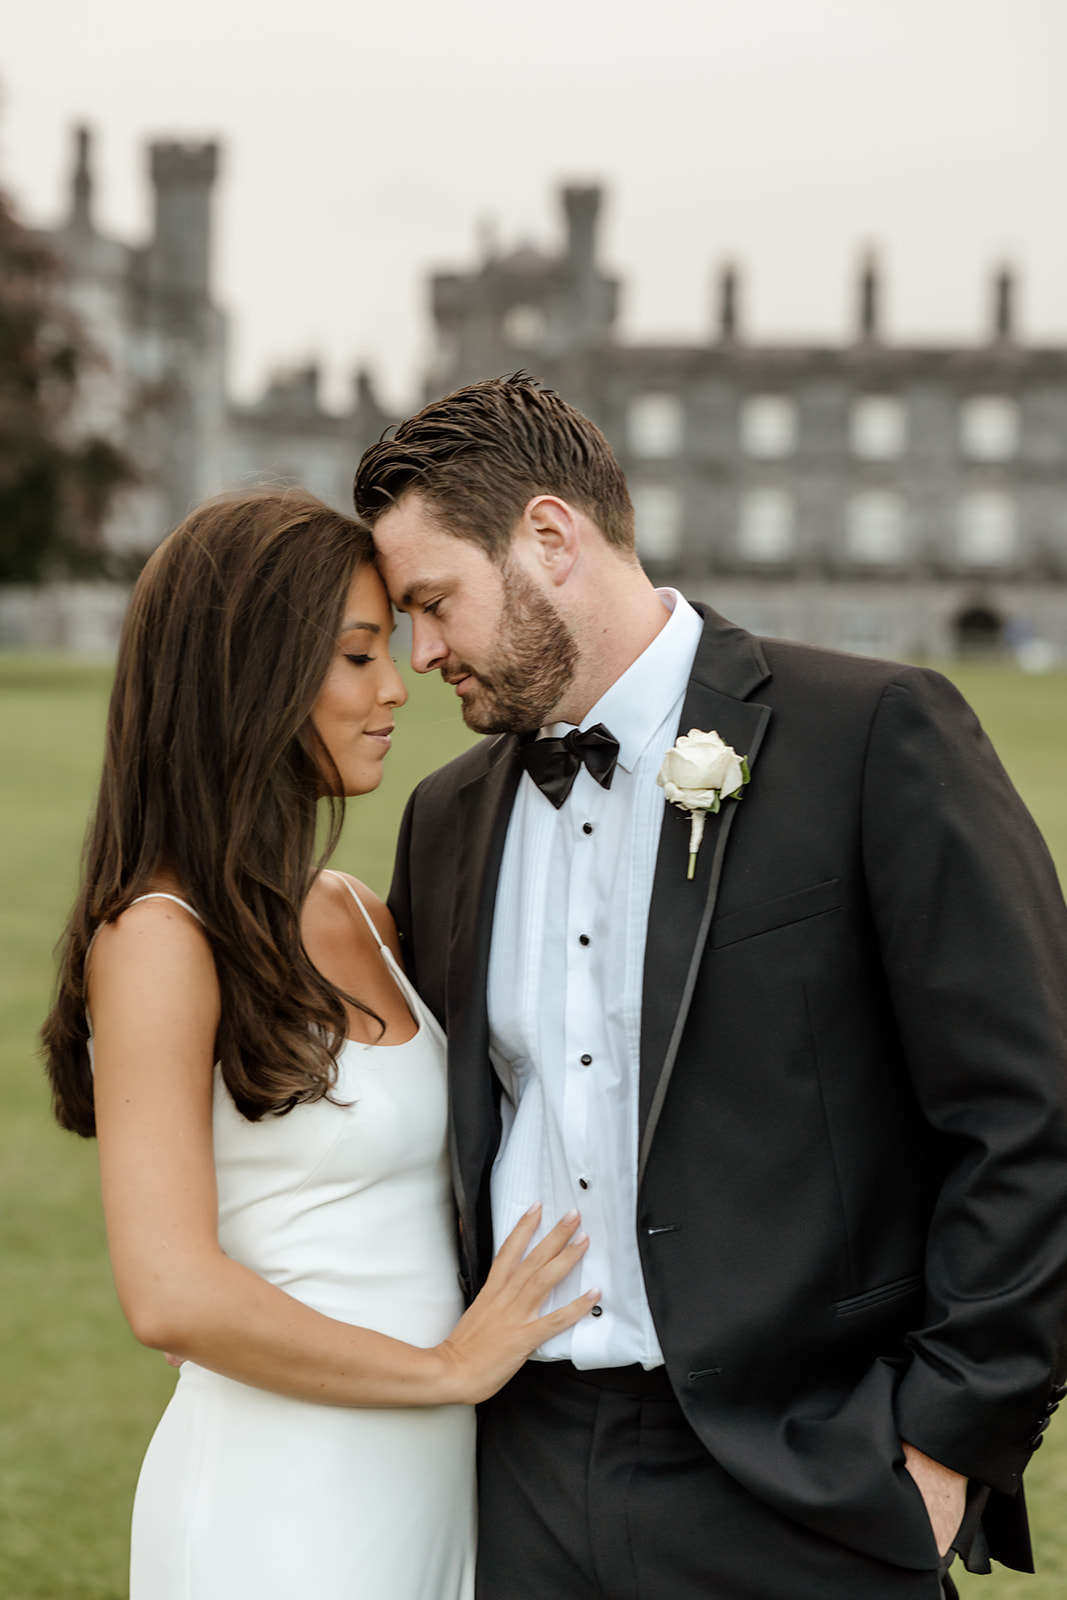 Castle elopement Kilkenny, Best elopement photographer Ireland, Sarah Kate Photography 